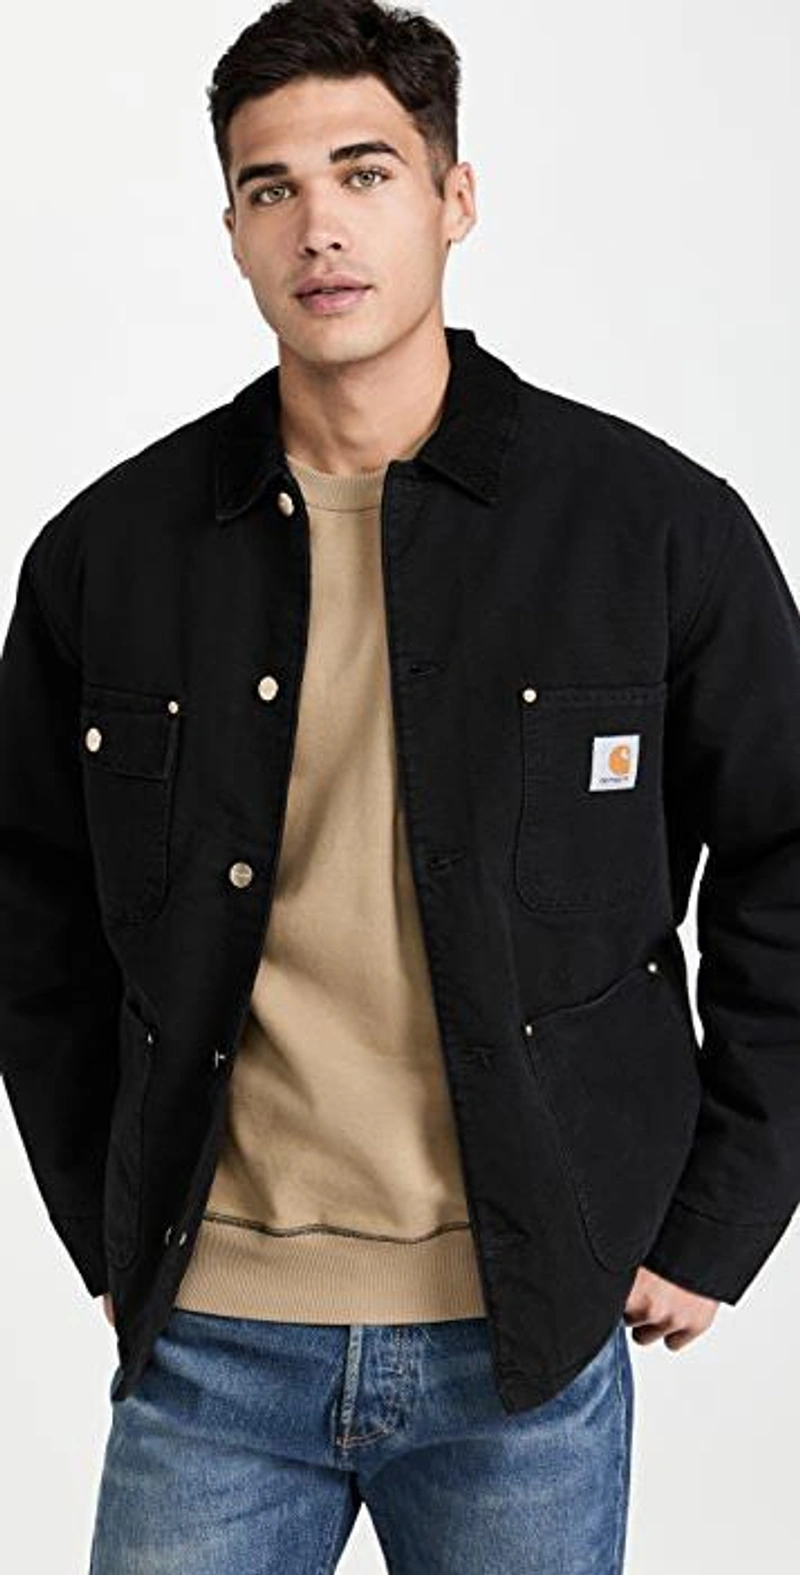 shopbop.com's Posts | 搭配: Carhartt Work In Progress 黑色 Michigan 灯芯绒夹克 In Black；De Bonne Facture Flannel Shirt；Lemaire Twisted Pants